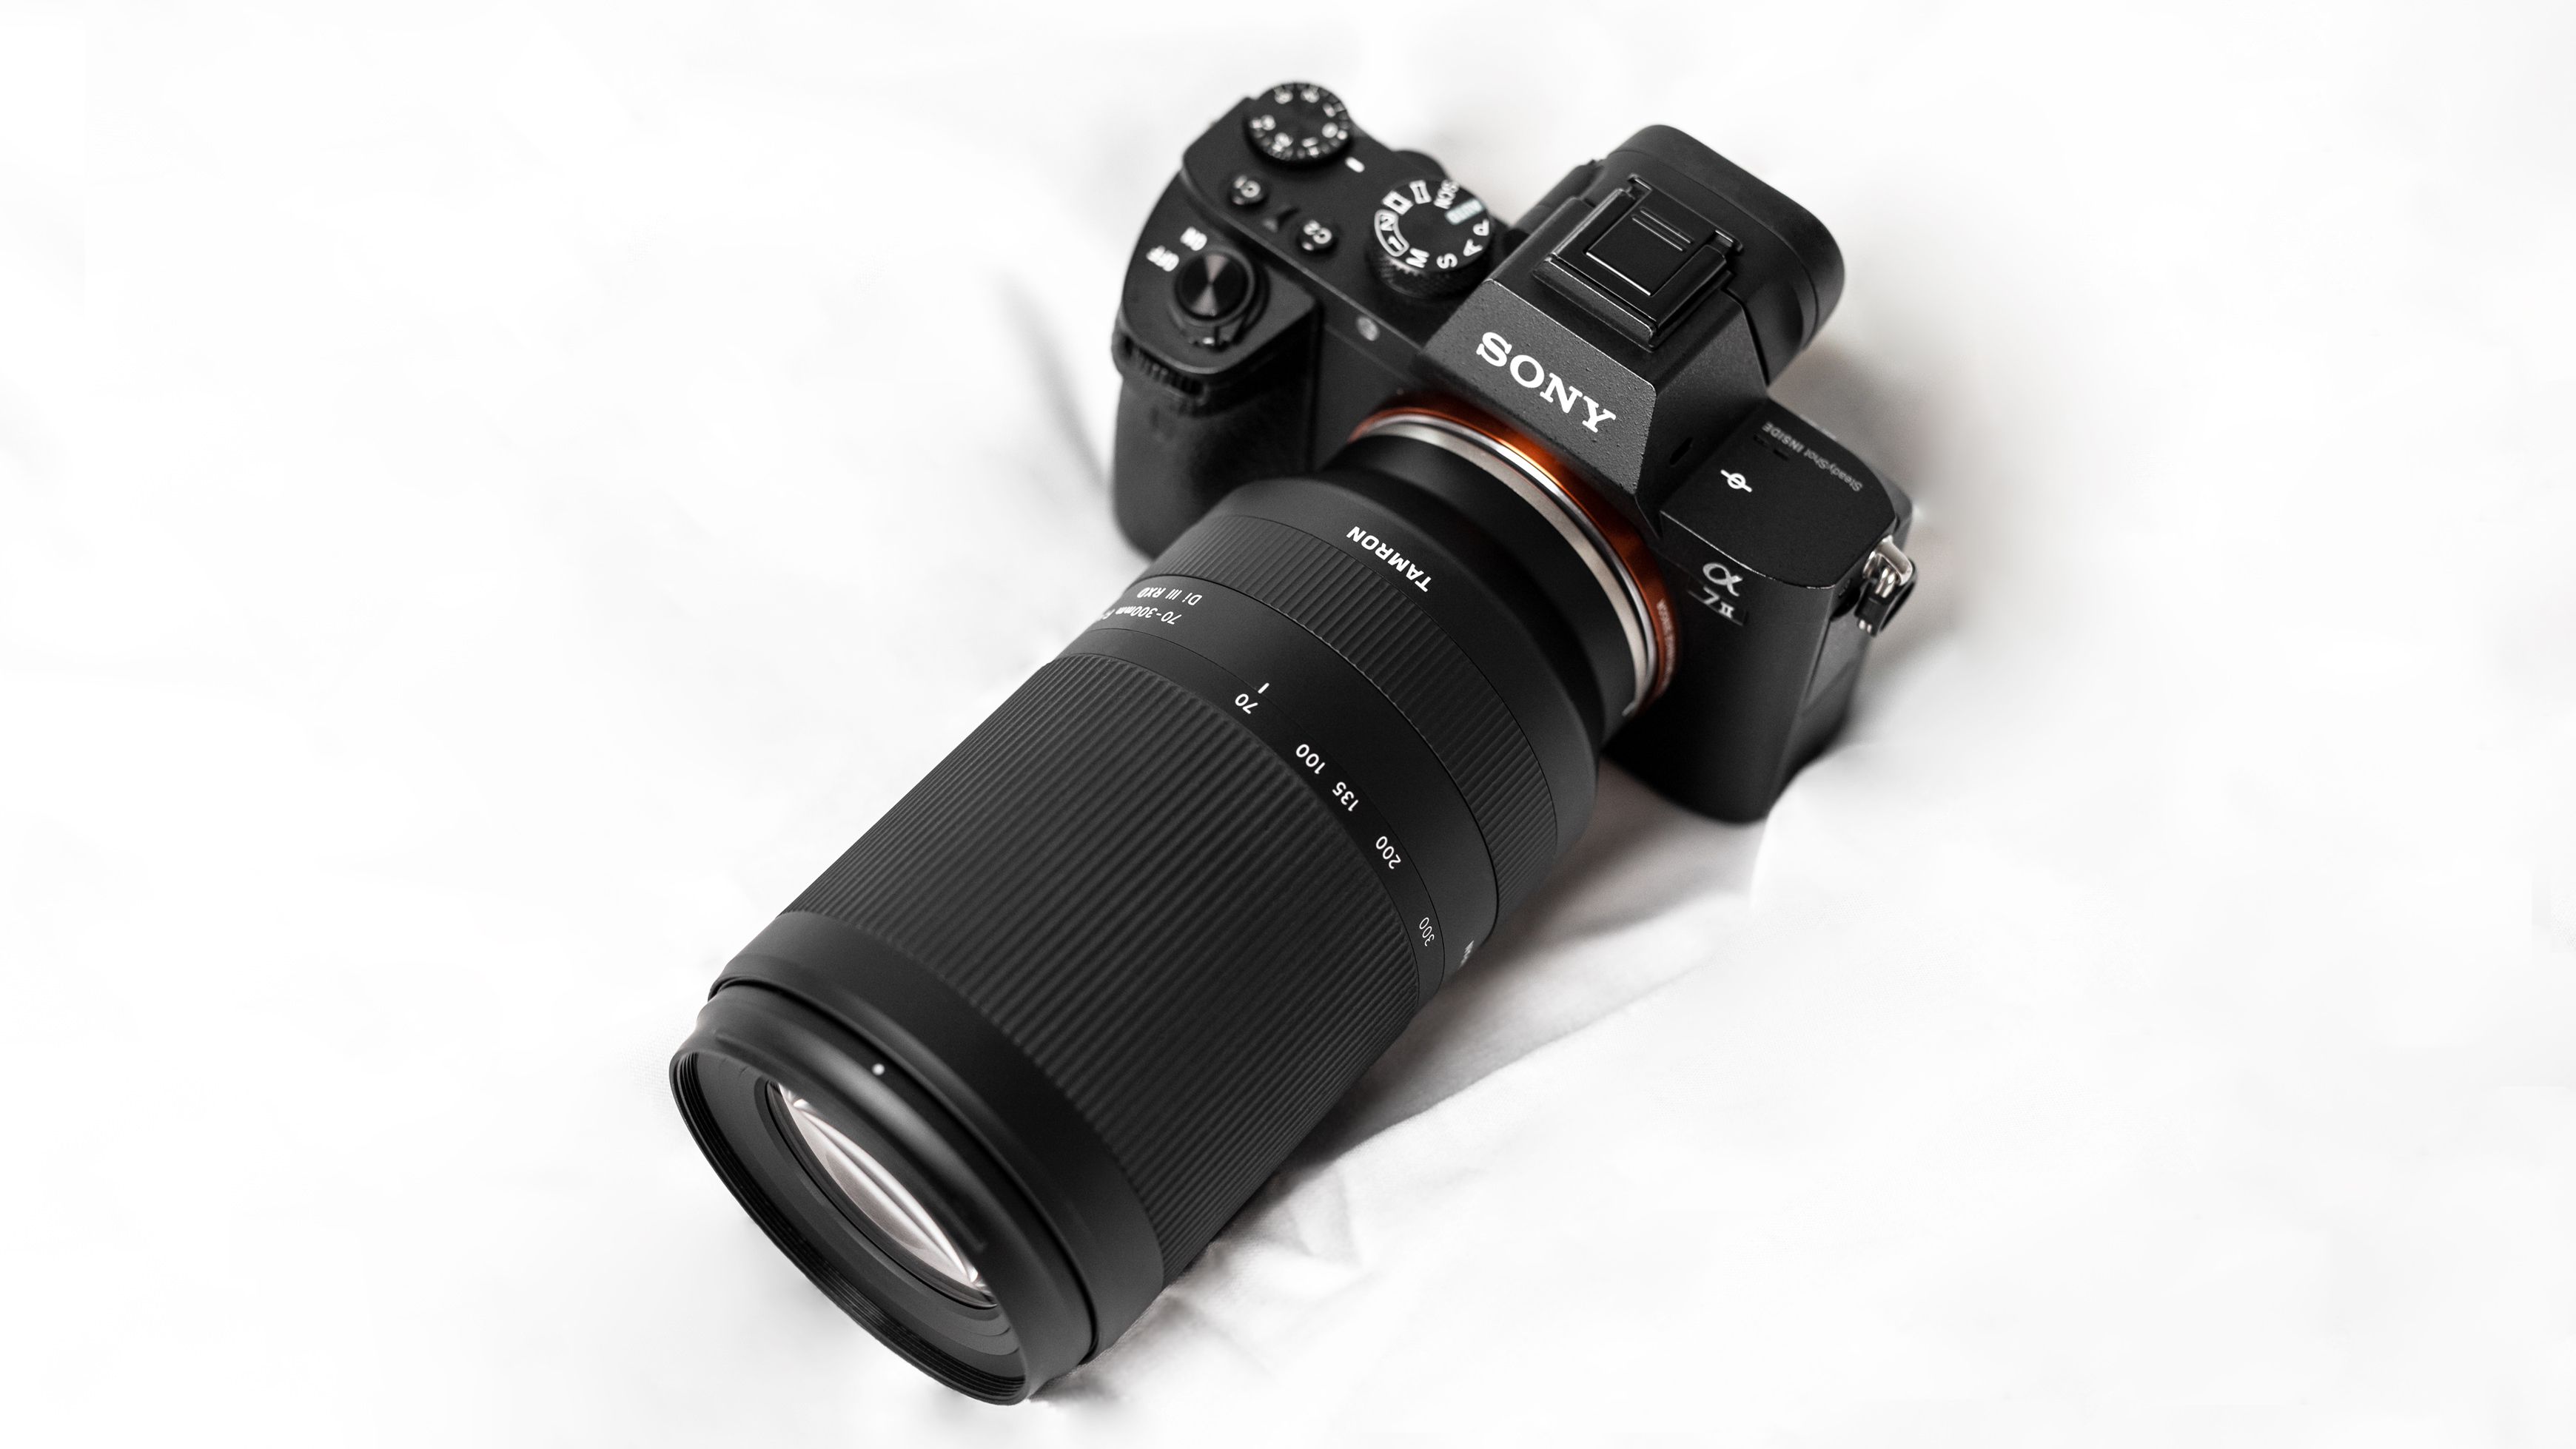 (P)review: Tamron 70-300mm F/4.5-6.3 Di III RXD - CameraStuff Review